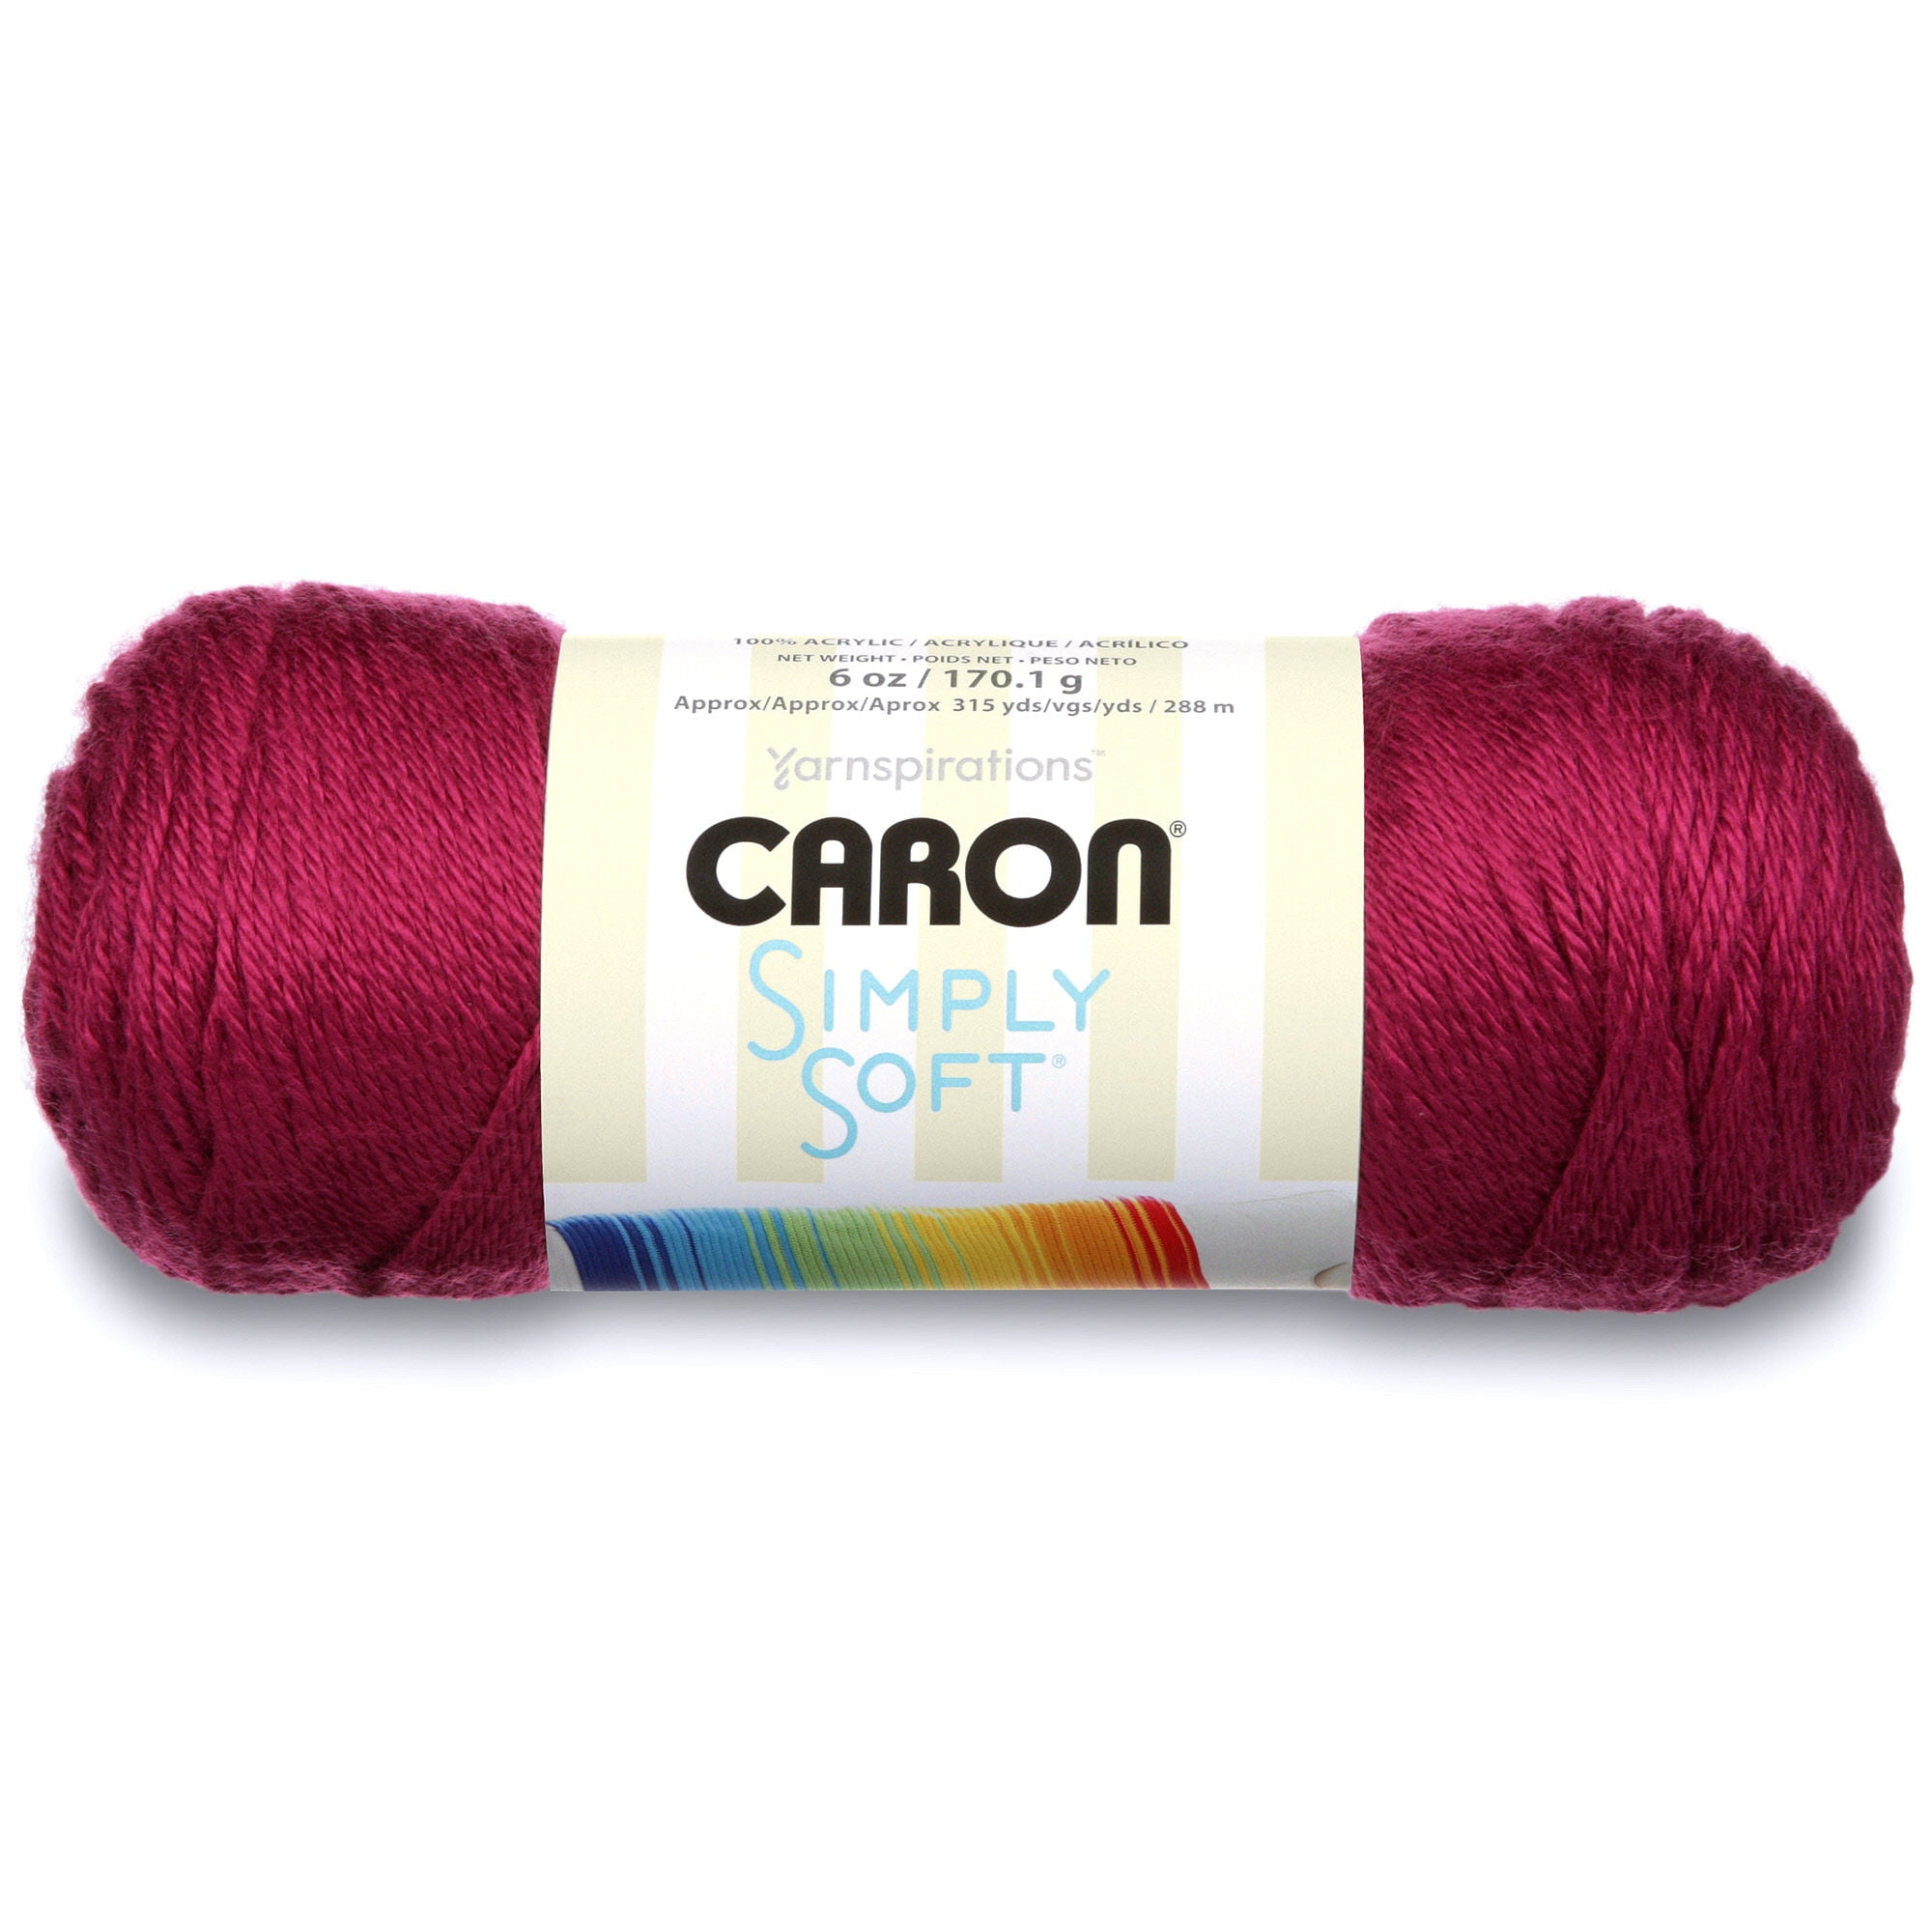 Caron Super Chunky Cakes 280g Knitting Crochet Yarn 100% Acrylic